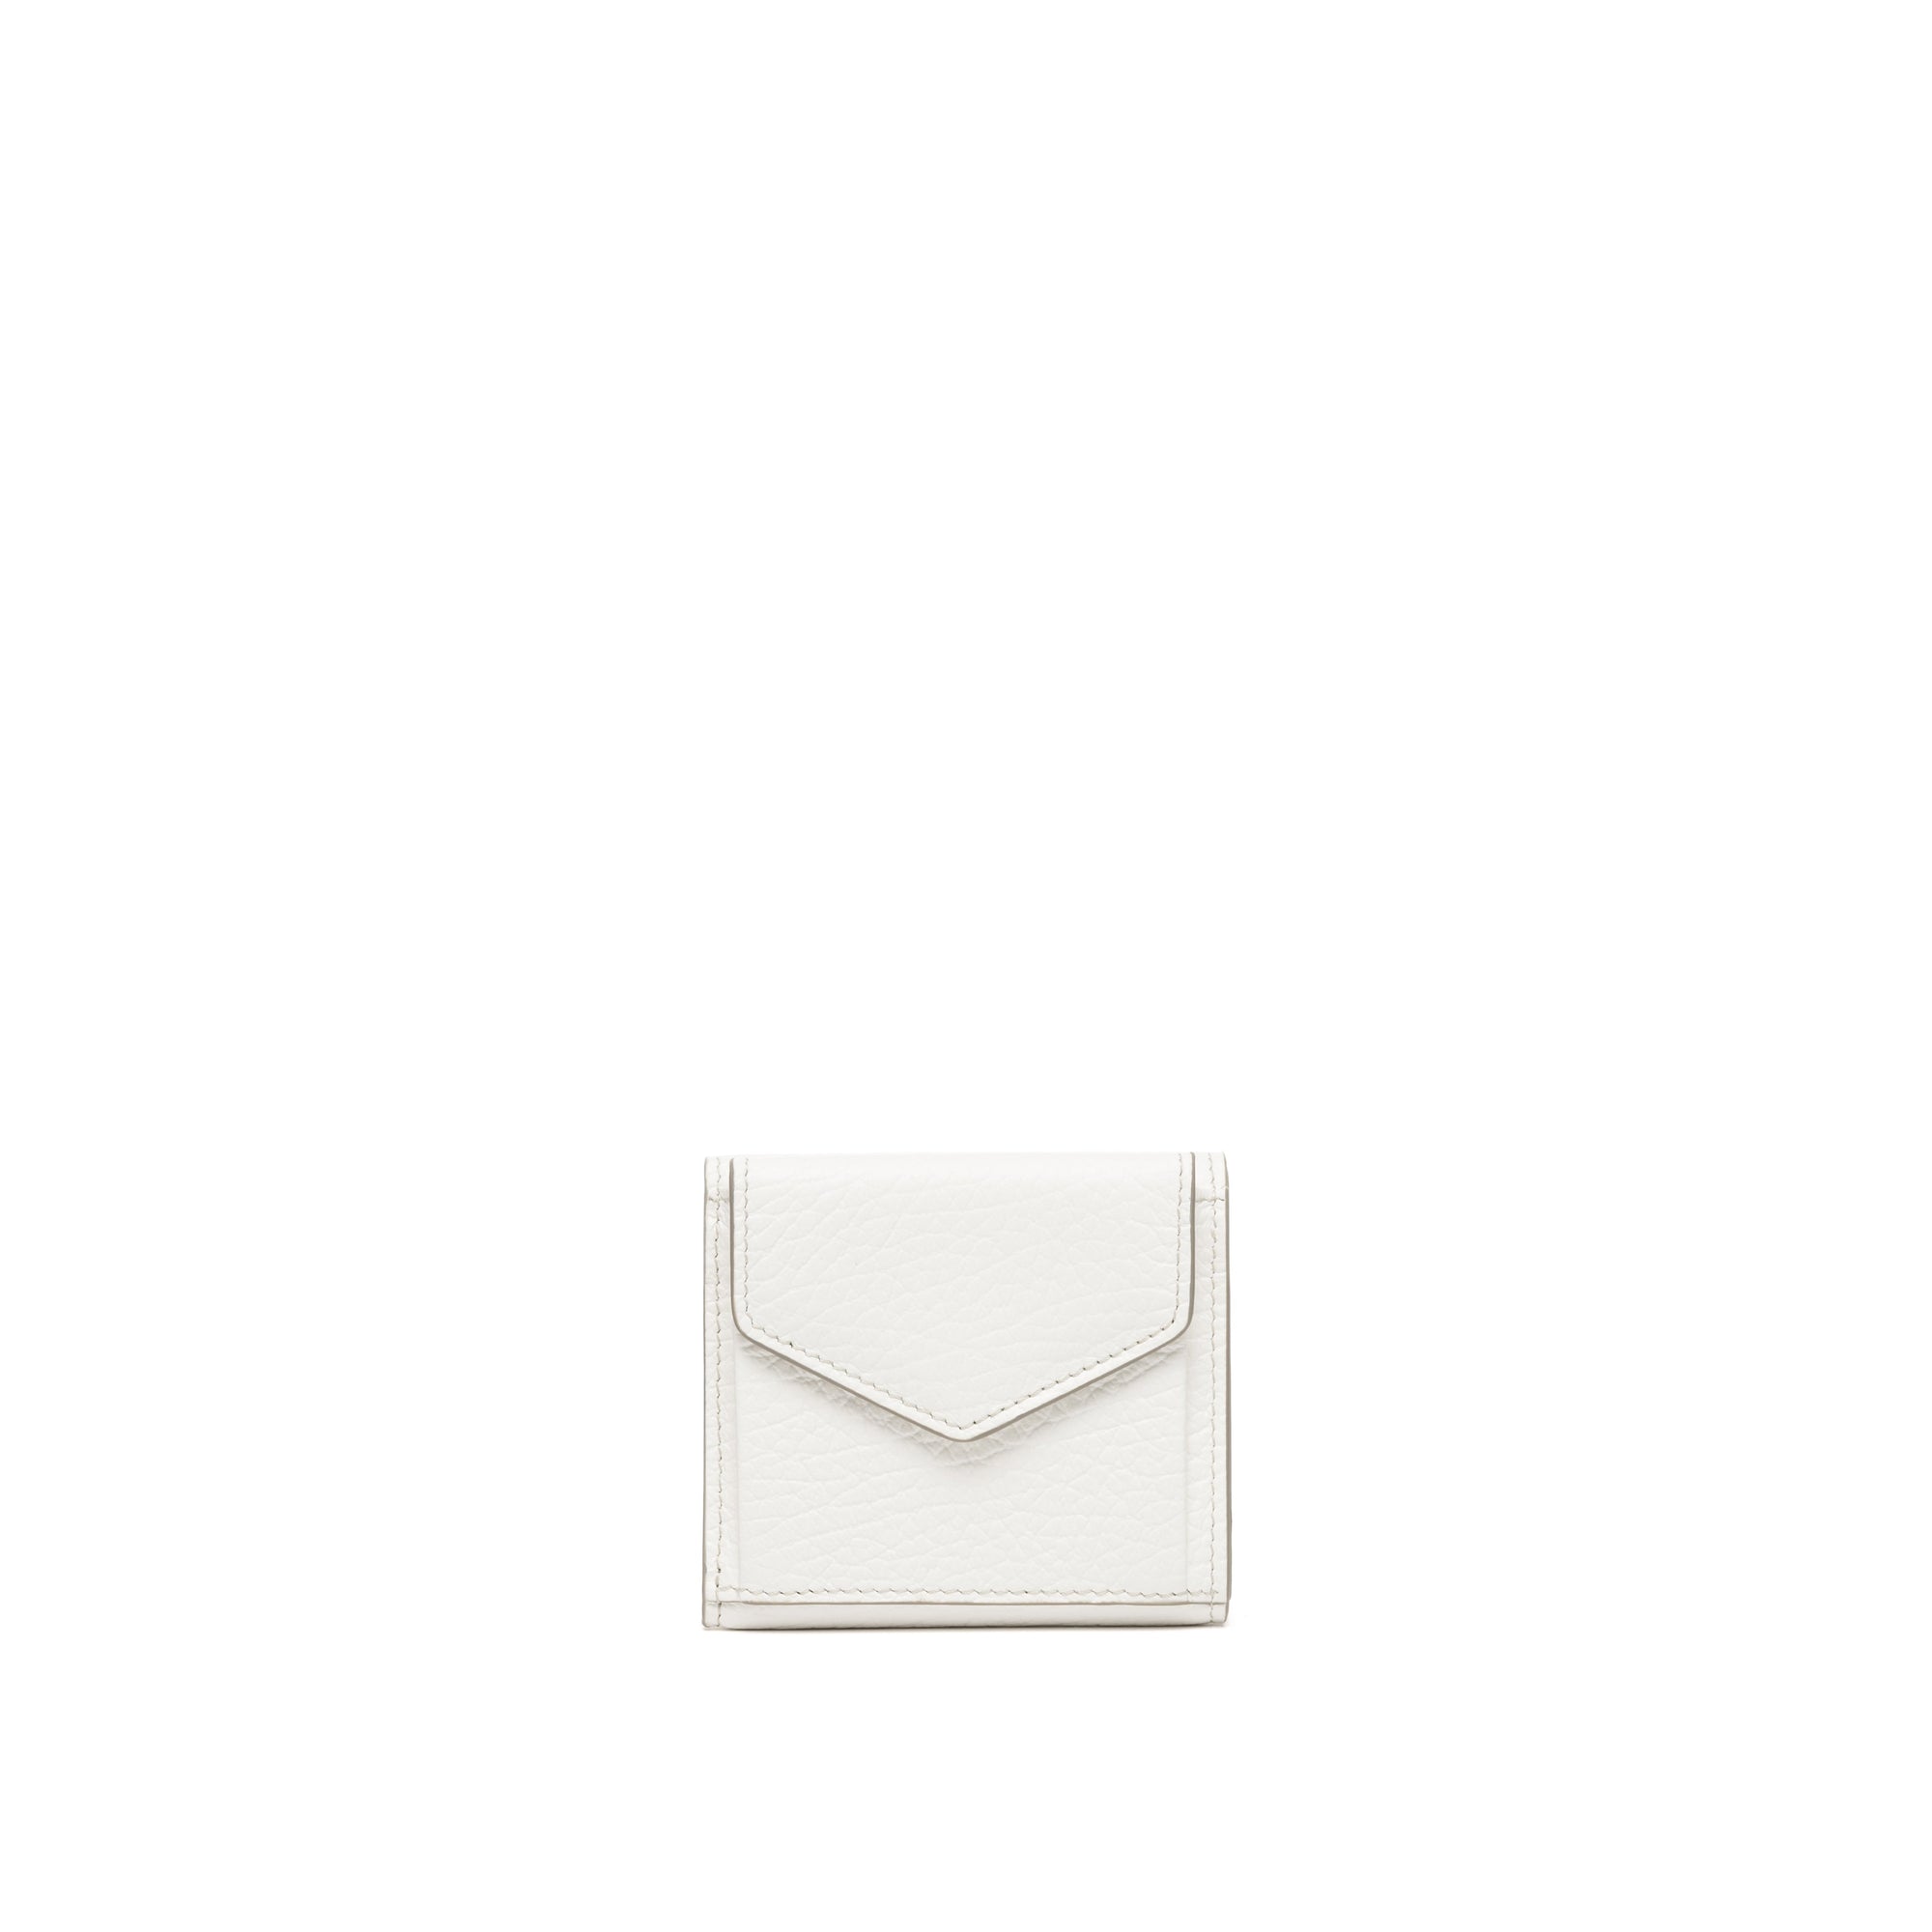 MAISON MARGIELA - Female Accessories AVP Small Wallet White - (S56UI0150) view 1